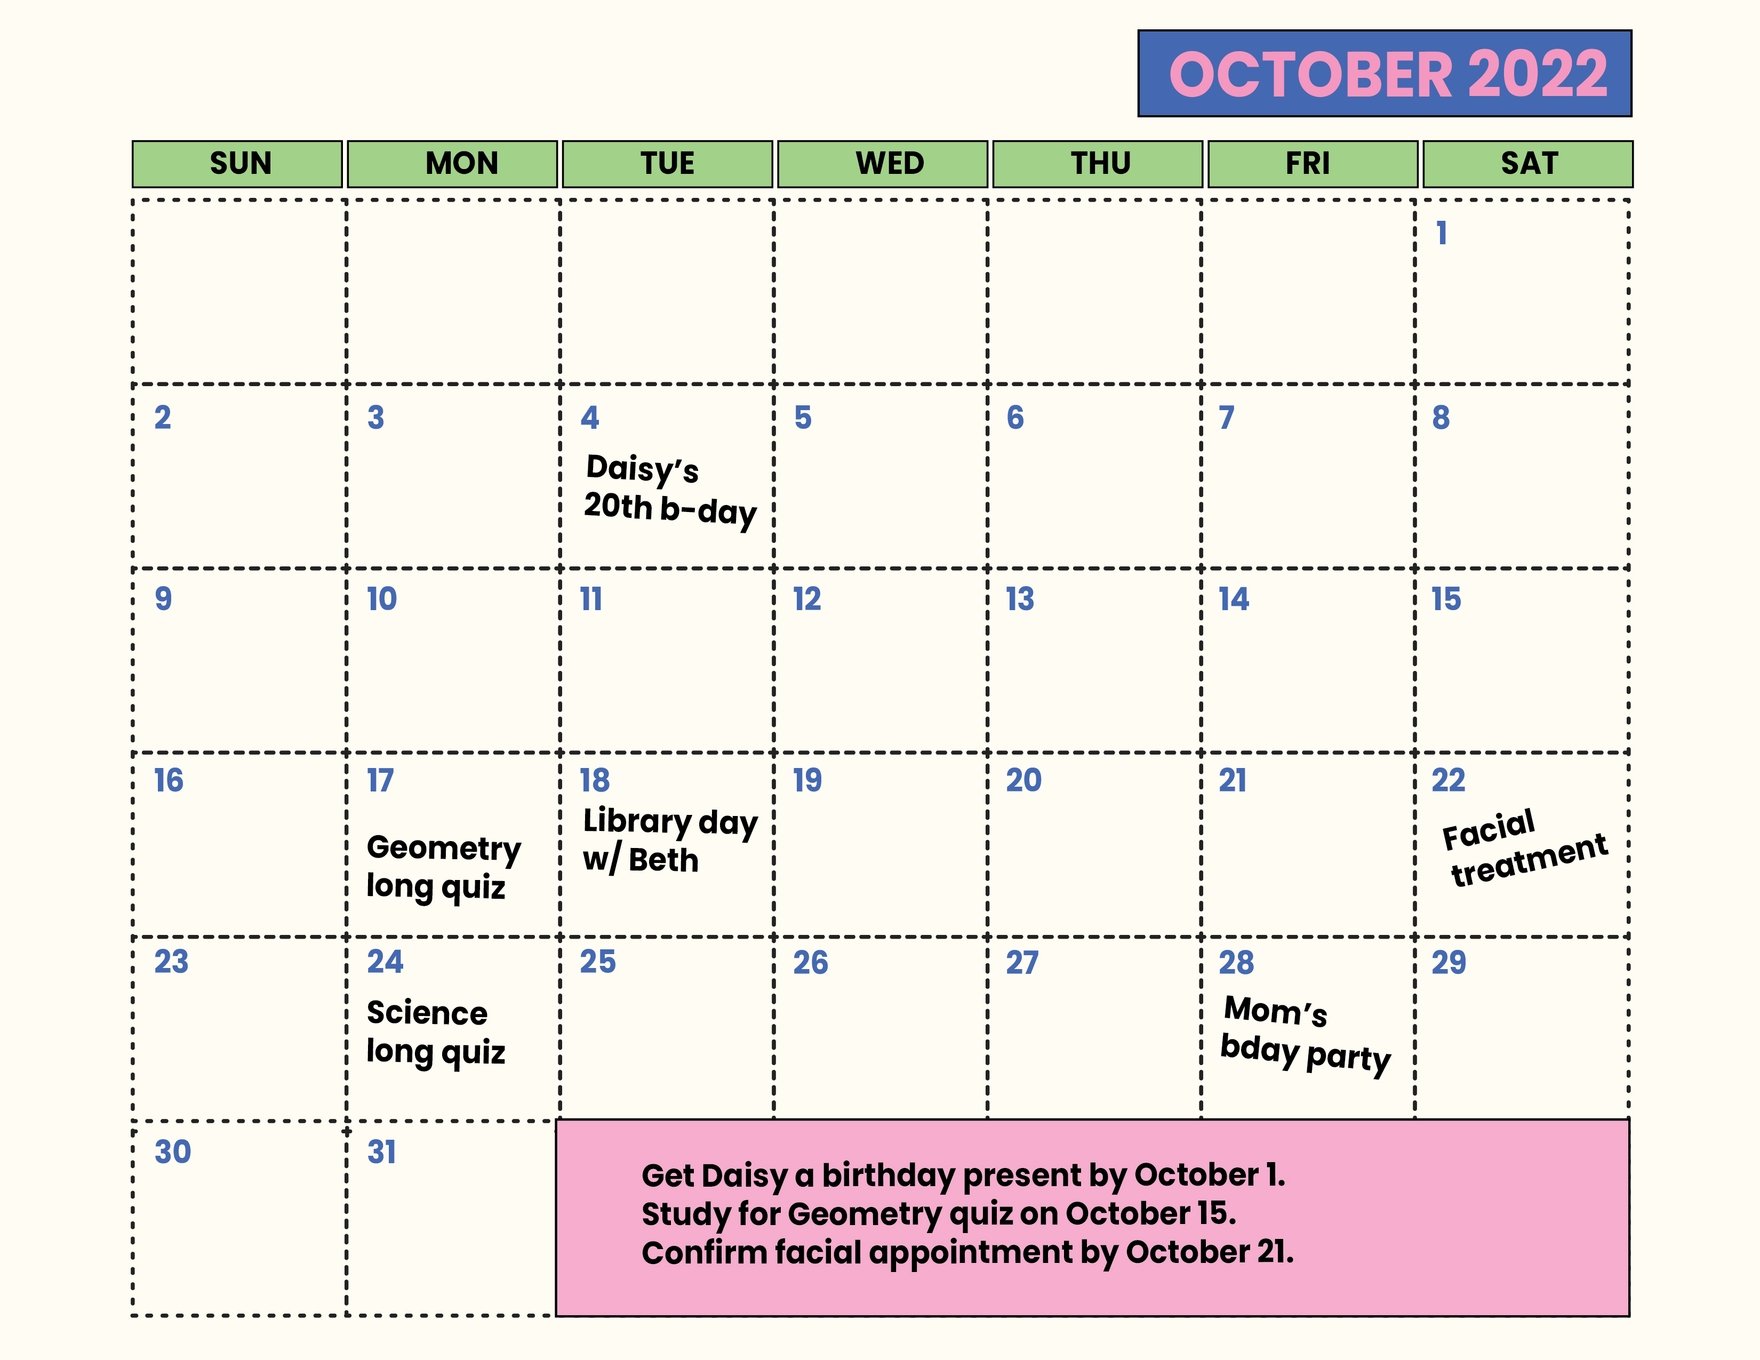 Free Printable October 2022 Calendar Template